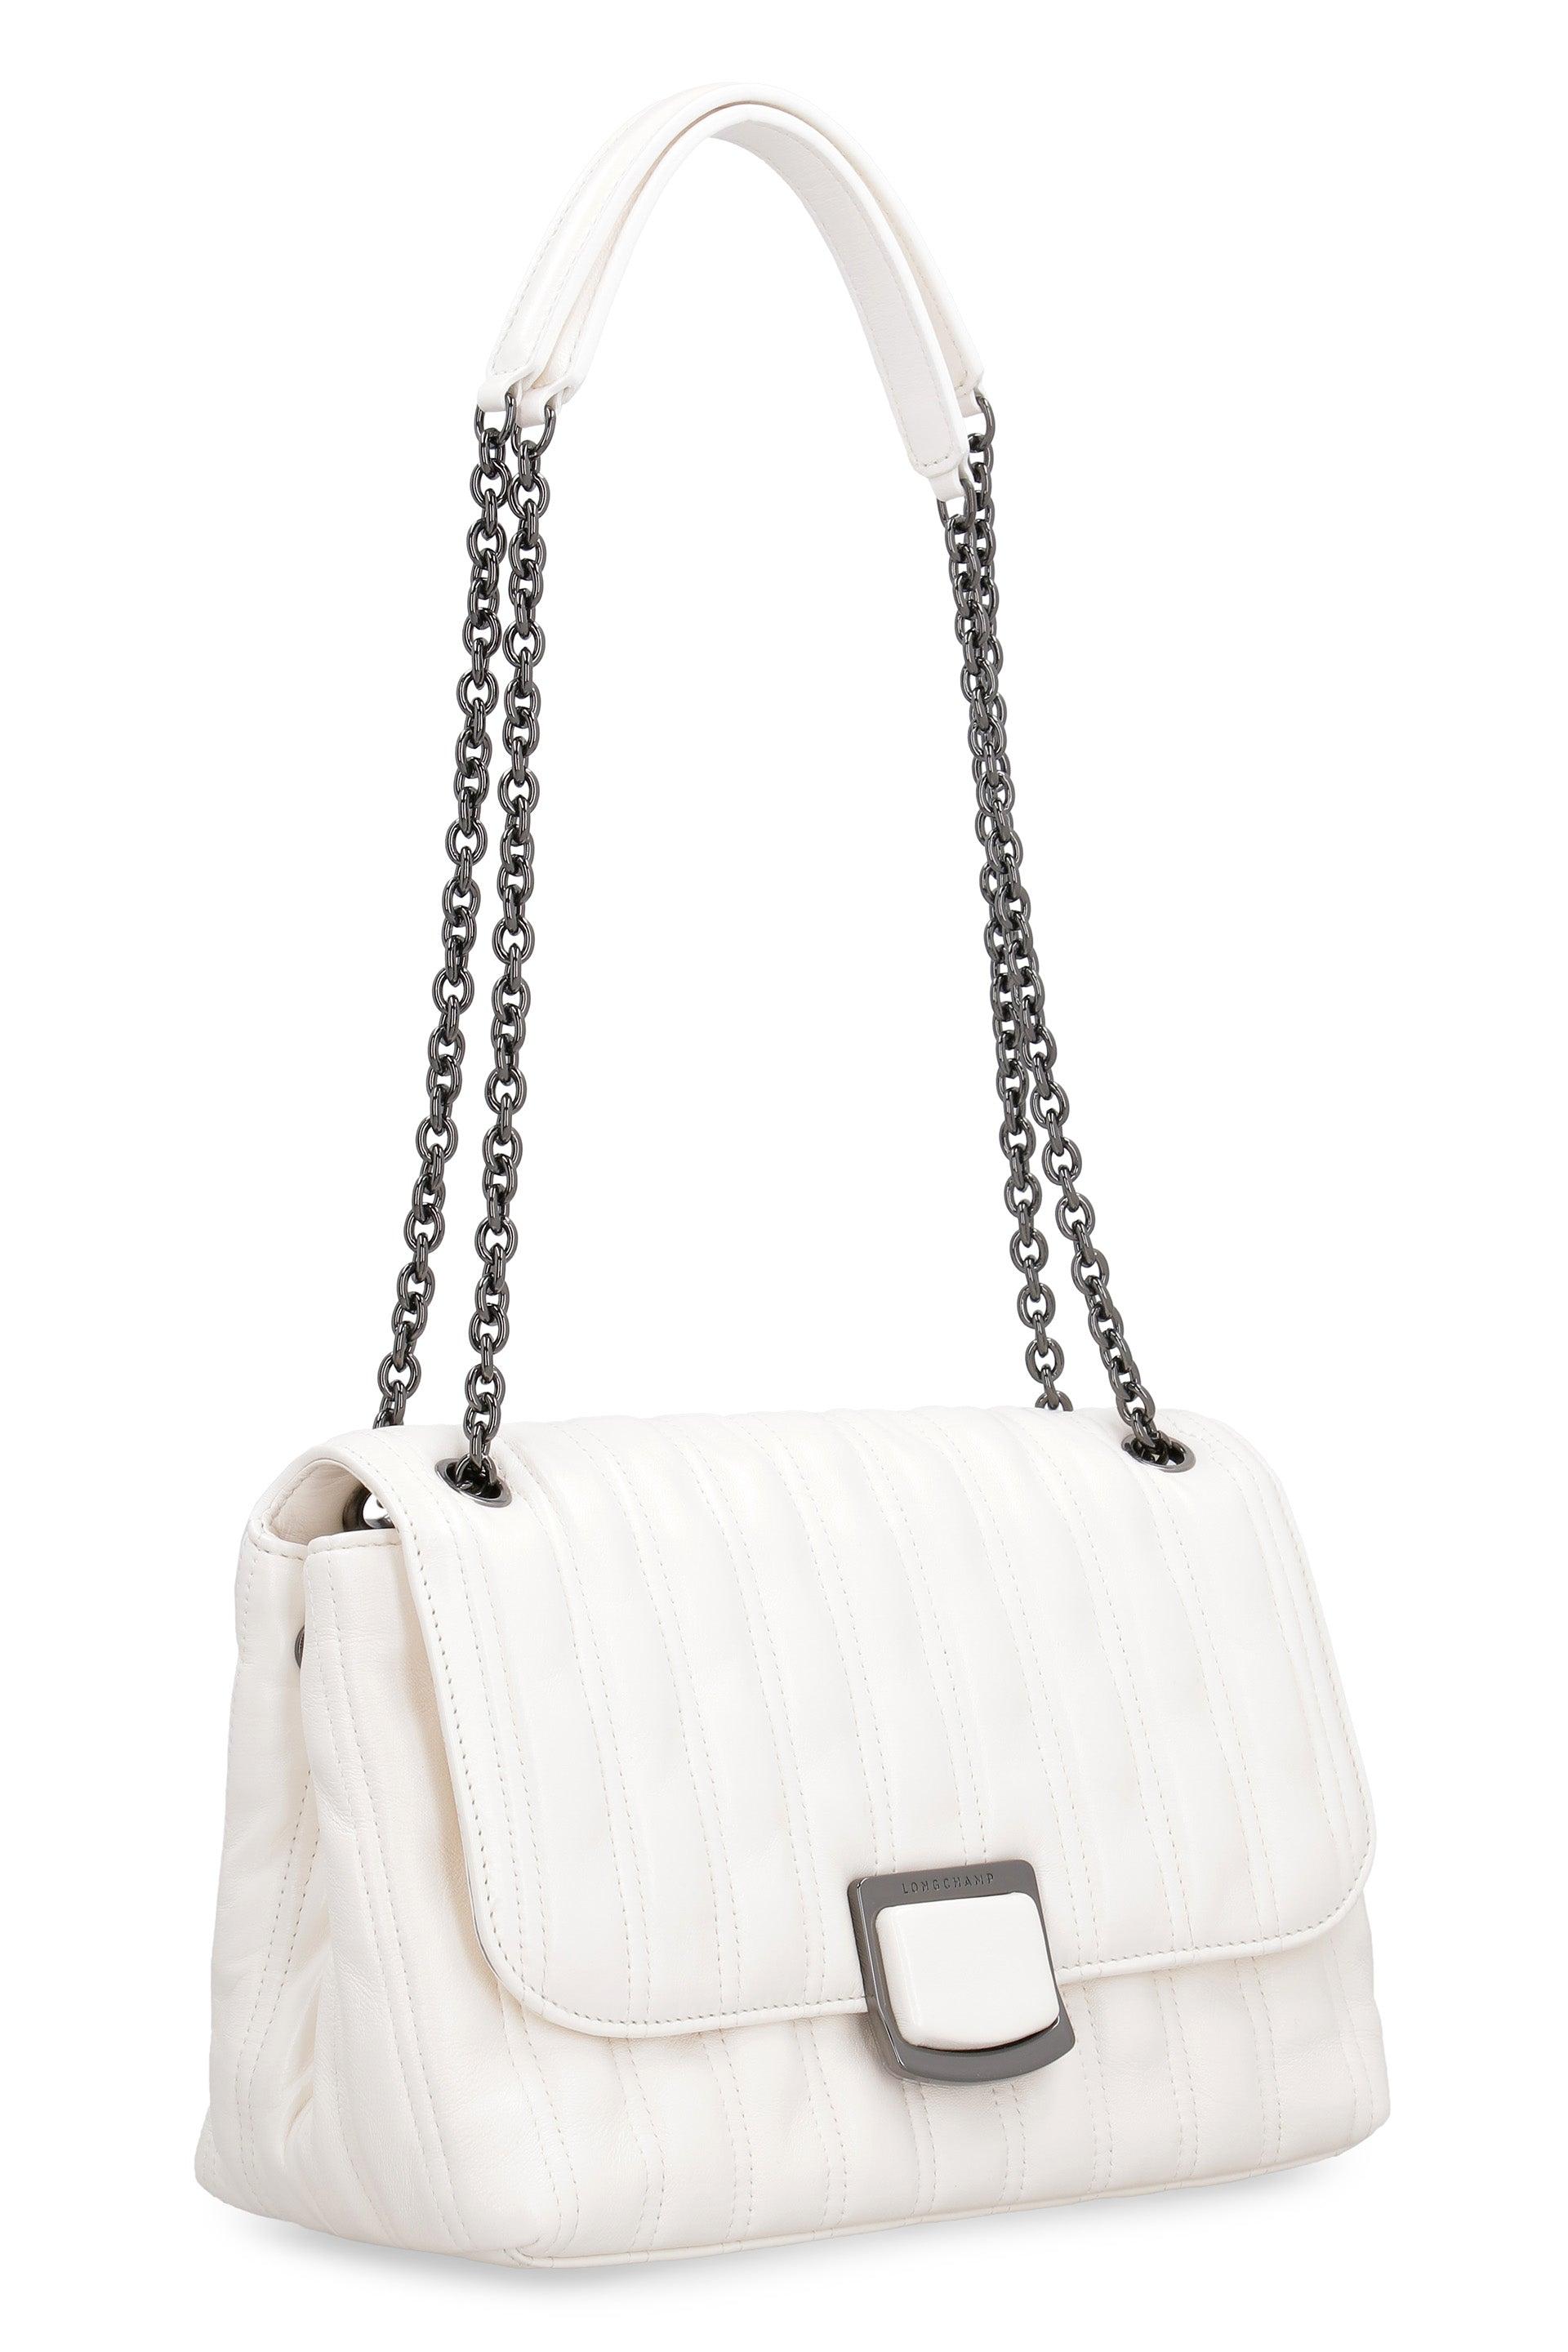 Longchamp Brioche Leather Shoulder Bag in White | Lyst